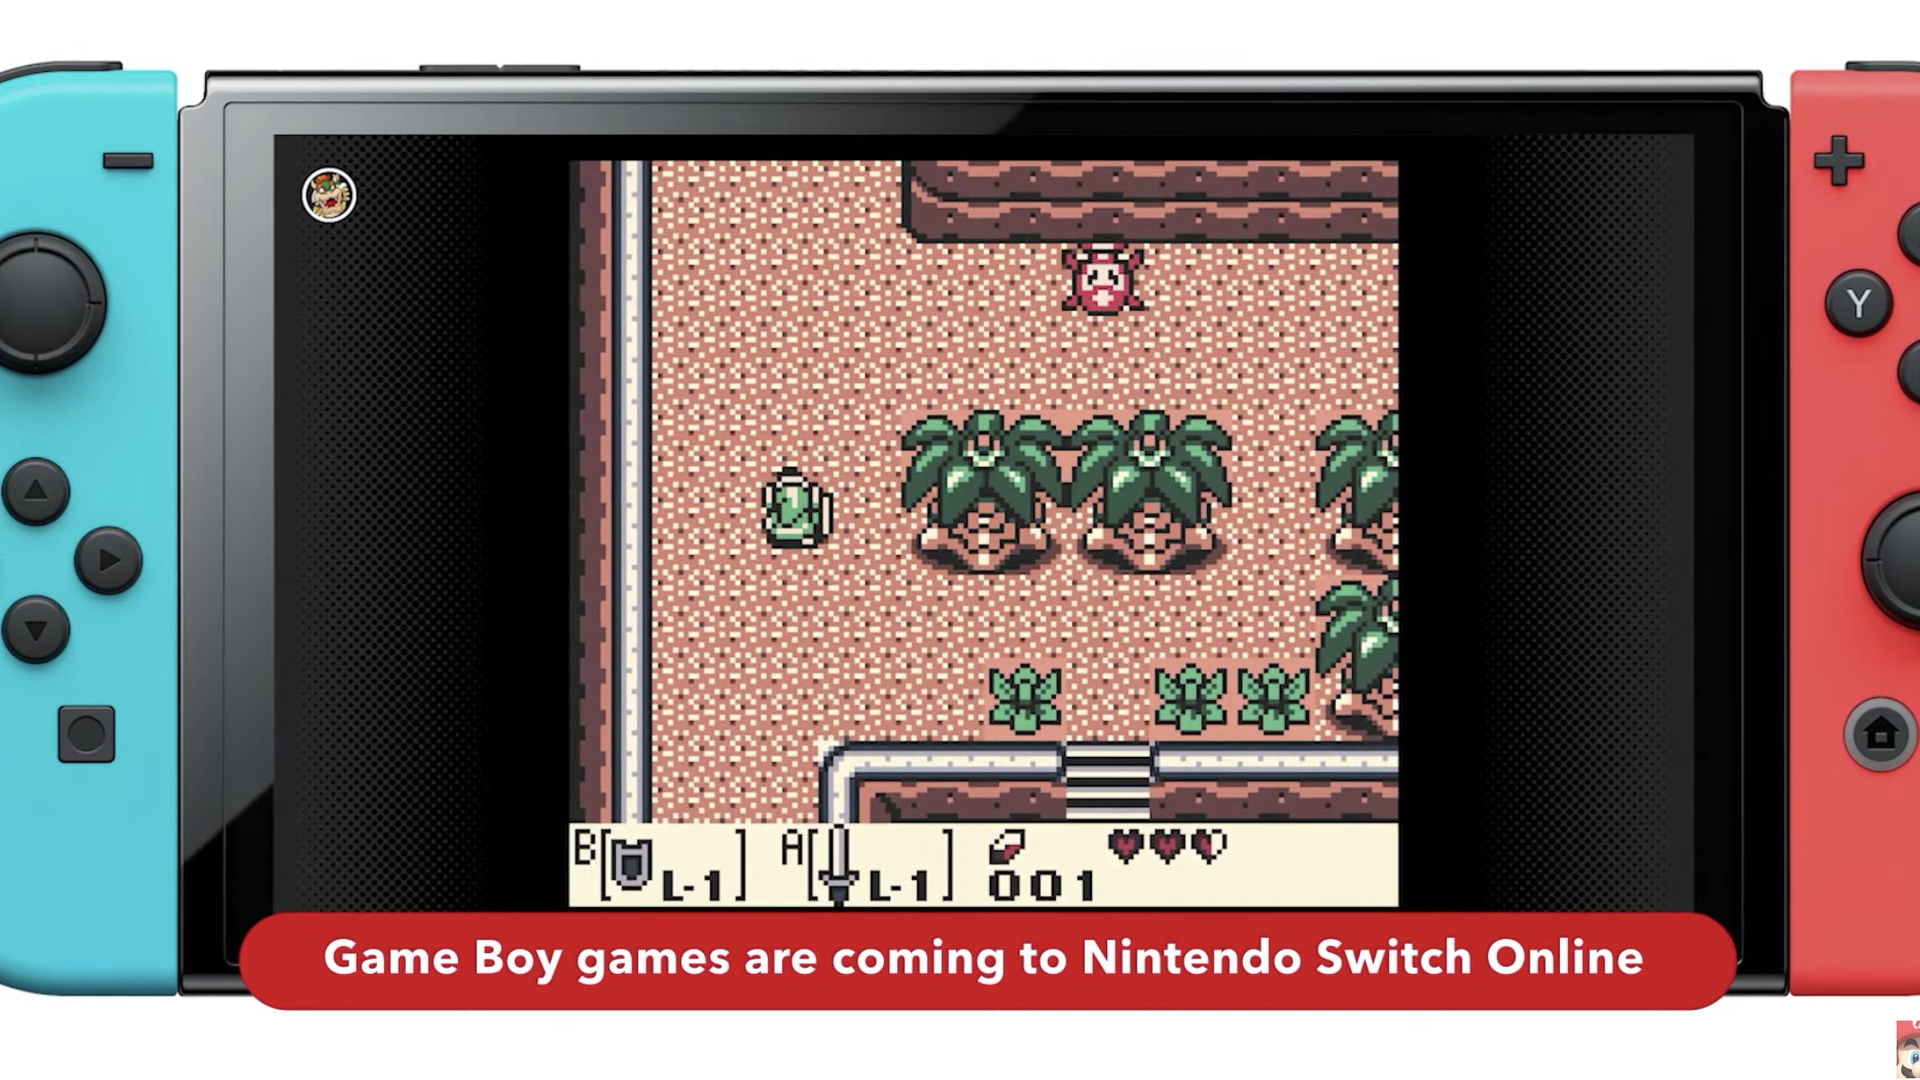 Nintendo brings Game Boy games on Switch